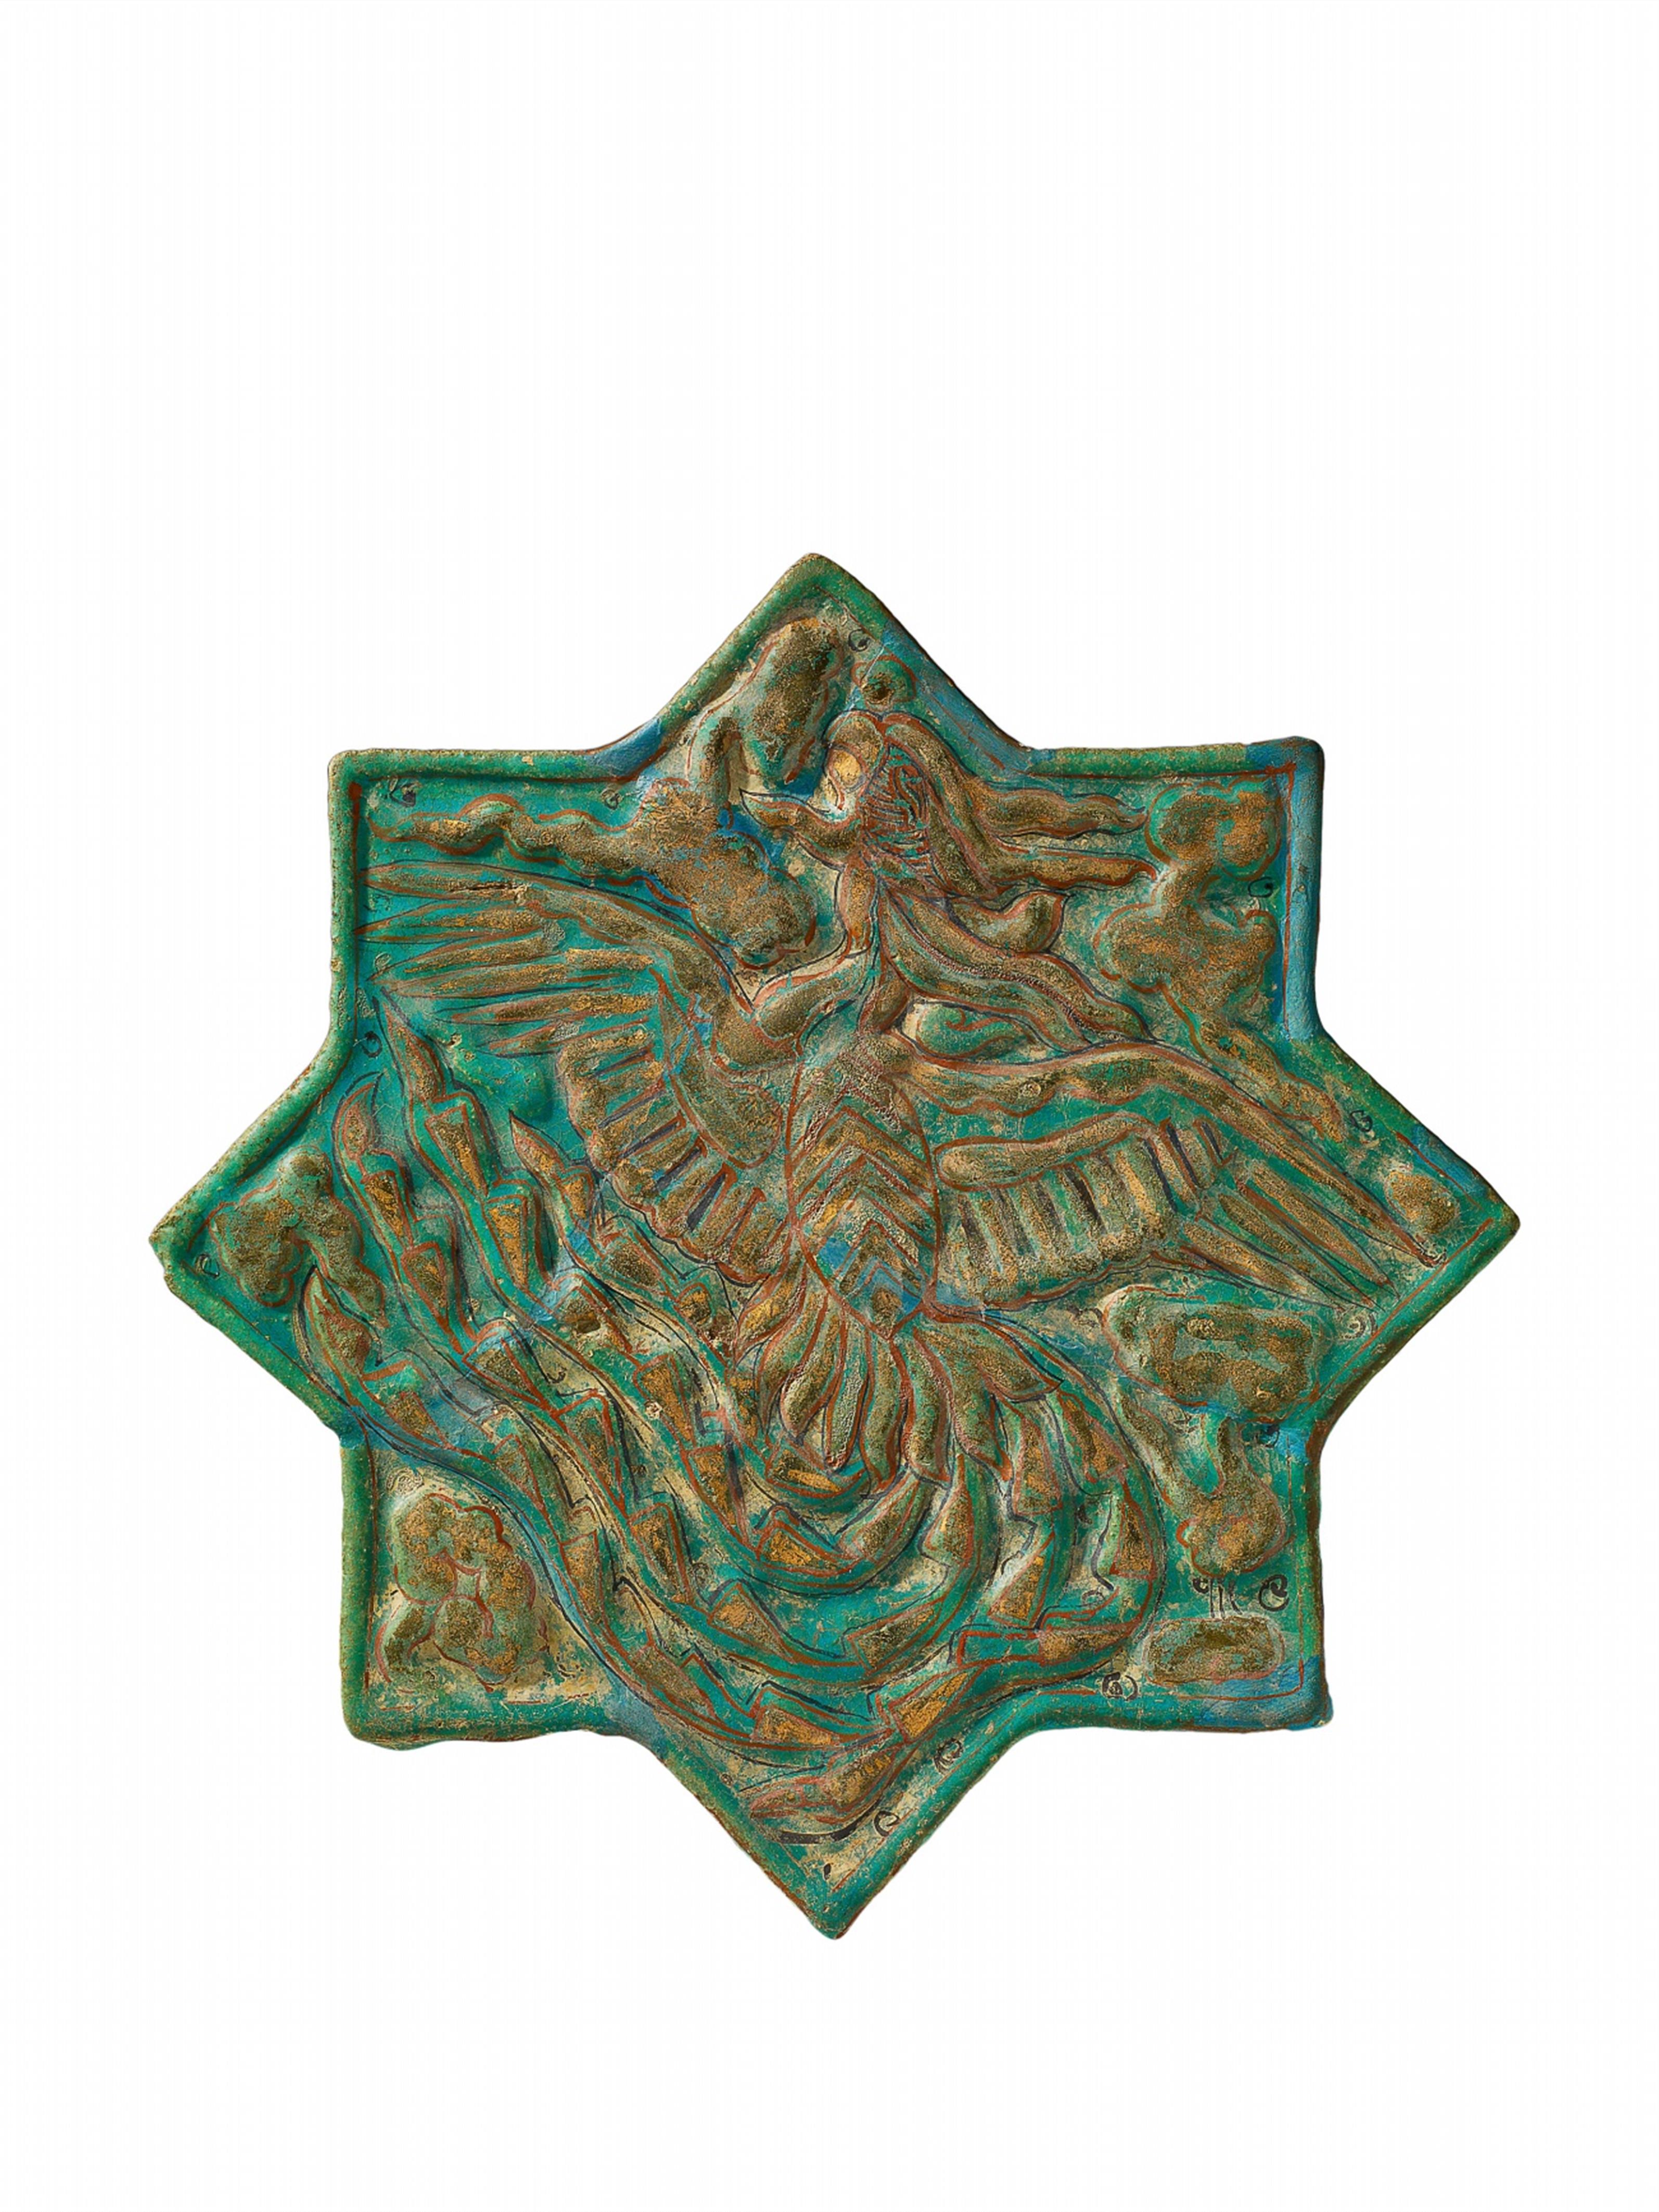 A star-shaped Iranian fritware tile with Lajvardina glaze - image-1